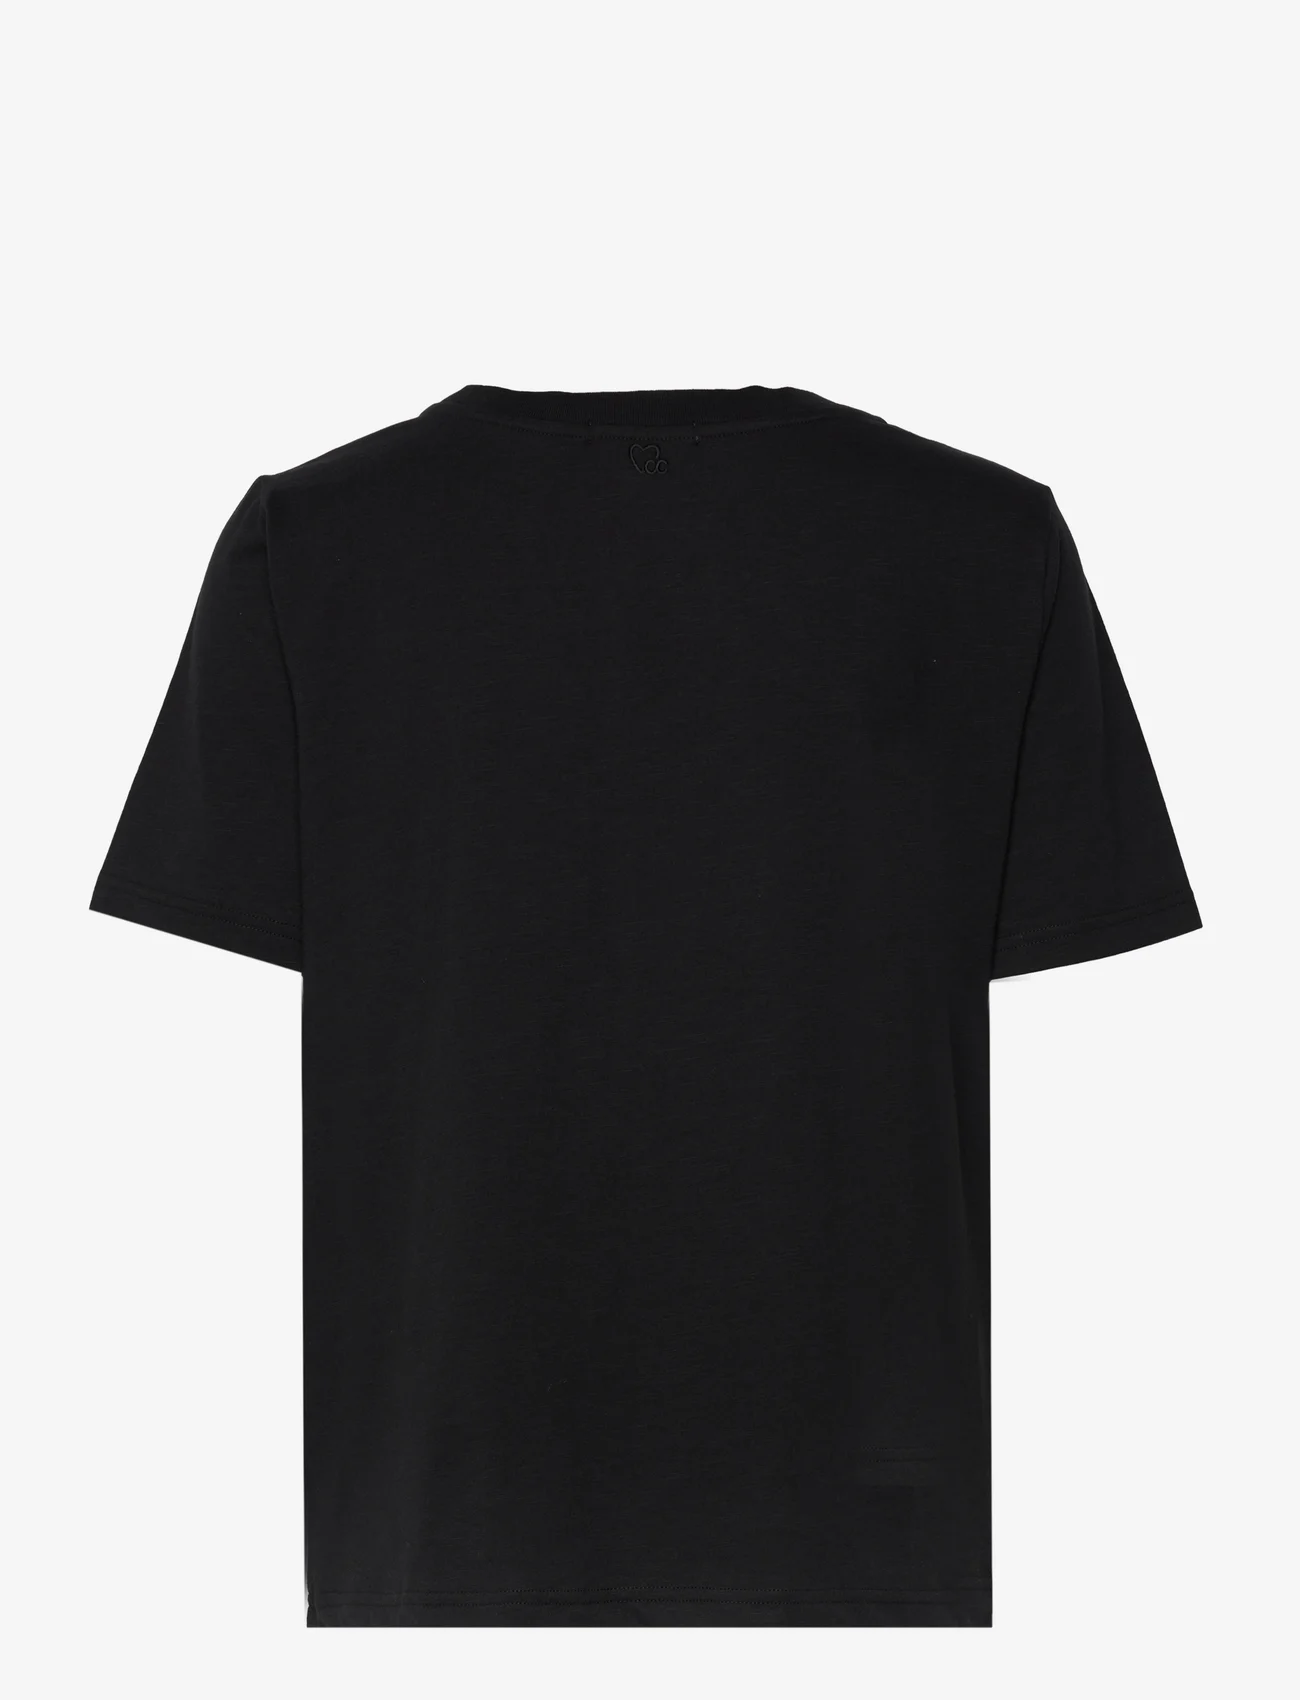 Coster Copenhagen - CC Heart regular t-shirt - mažiausios kainos - black - 1